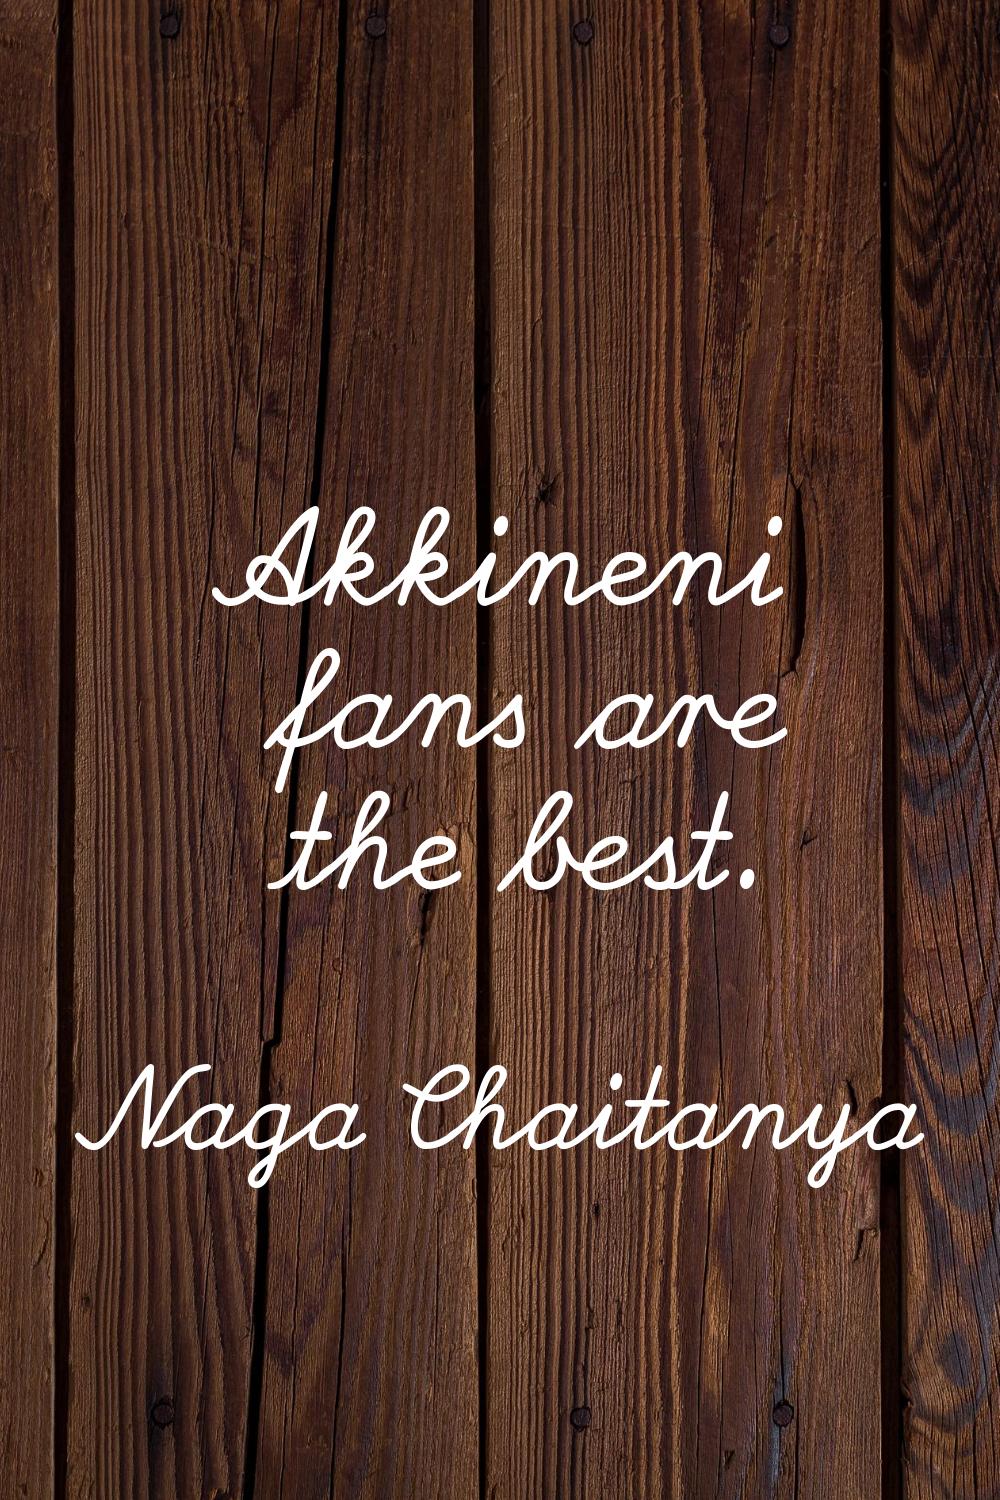 Akkineni fans are the best.